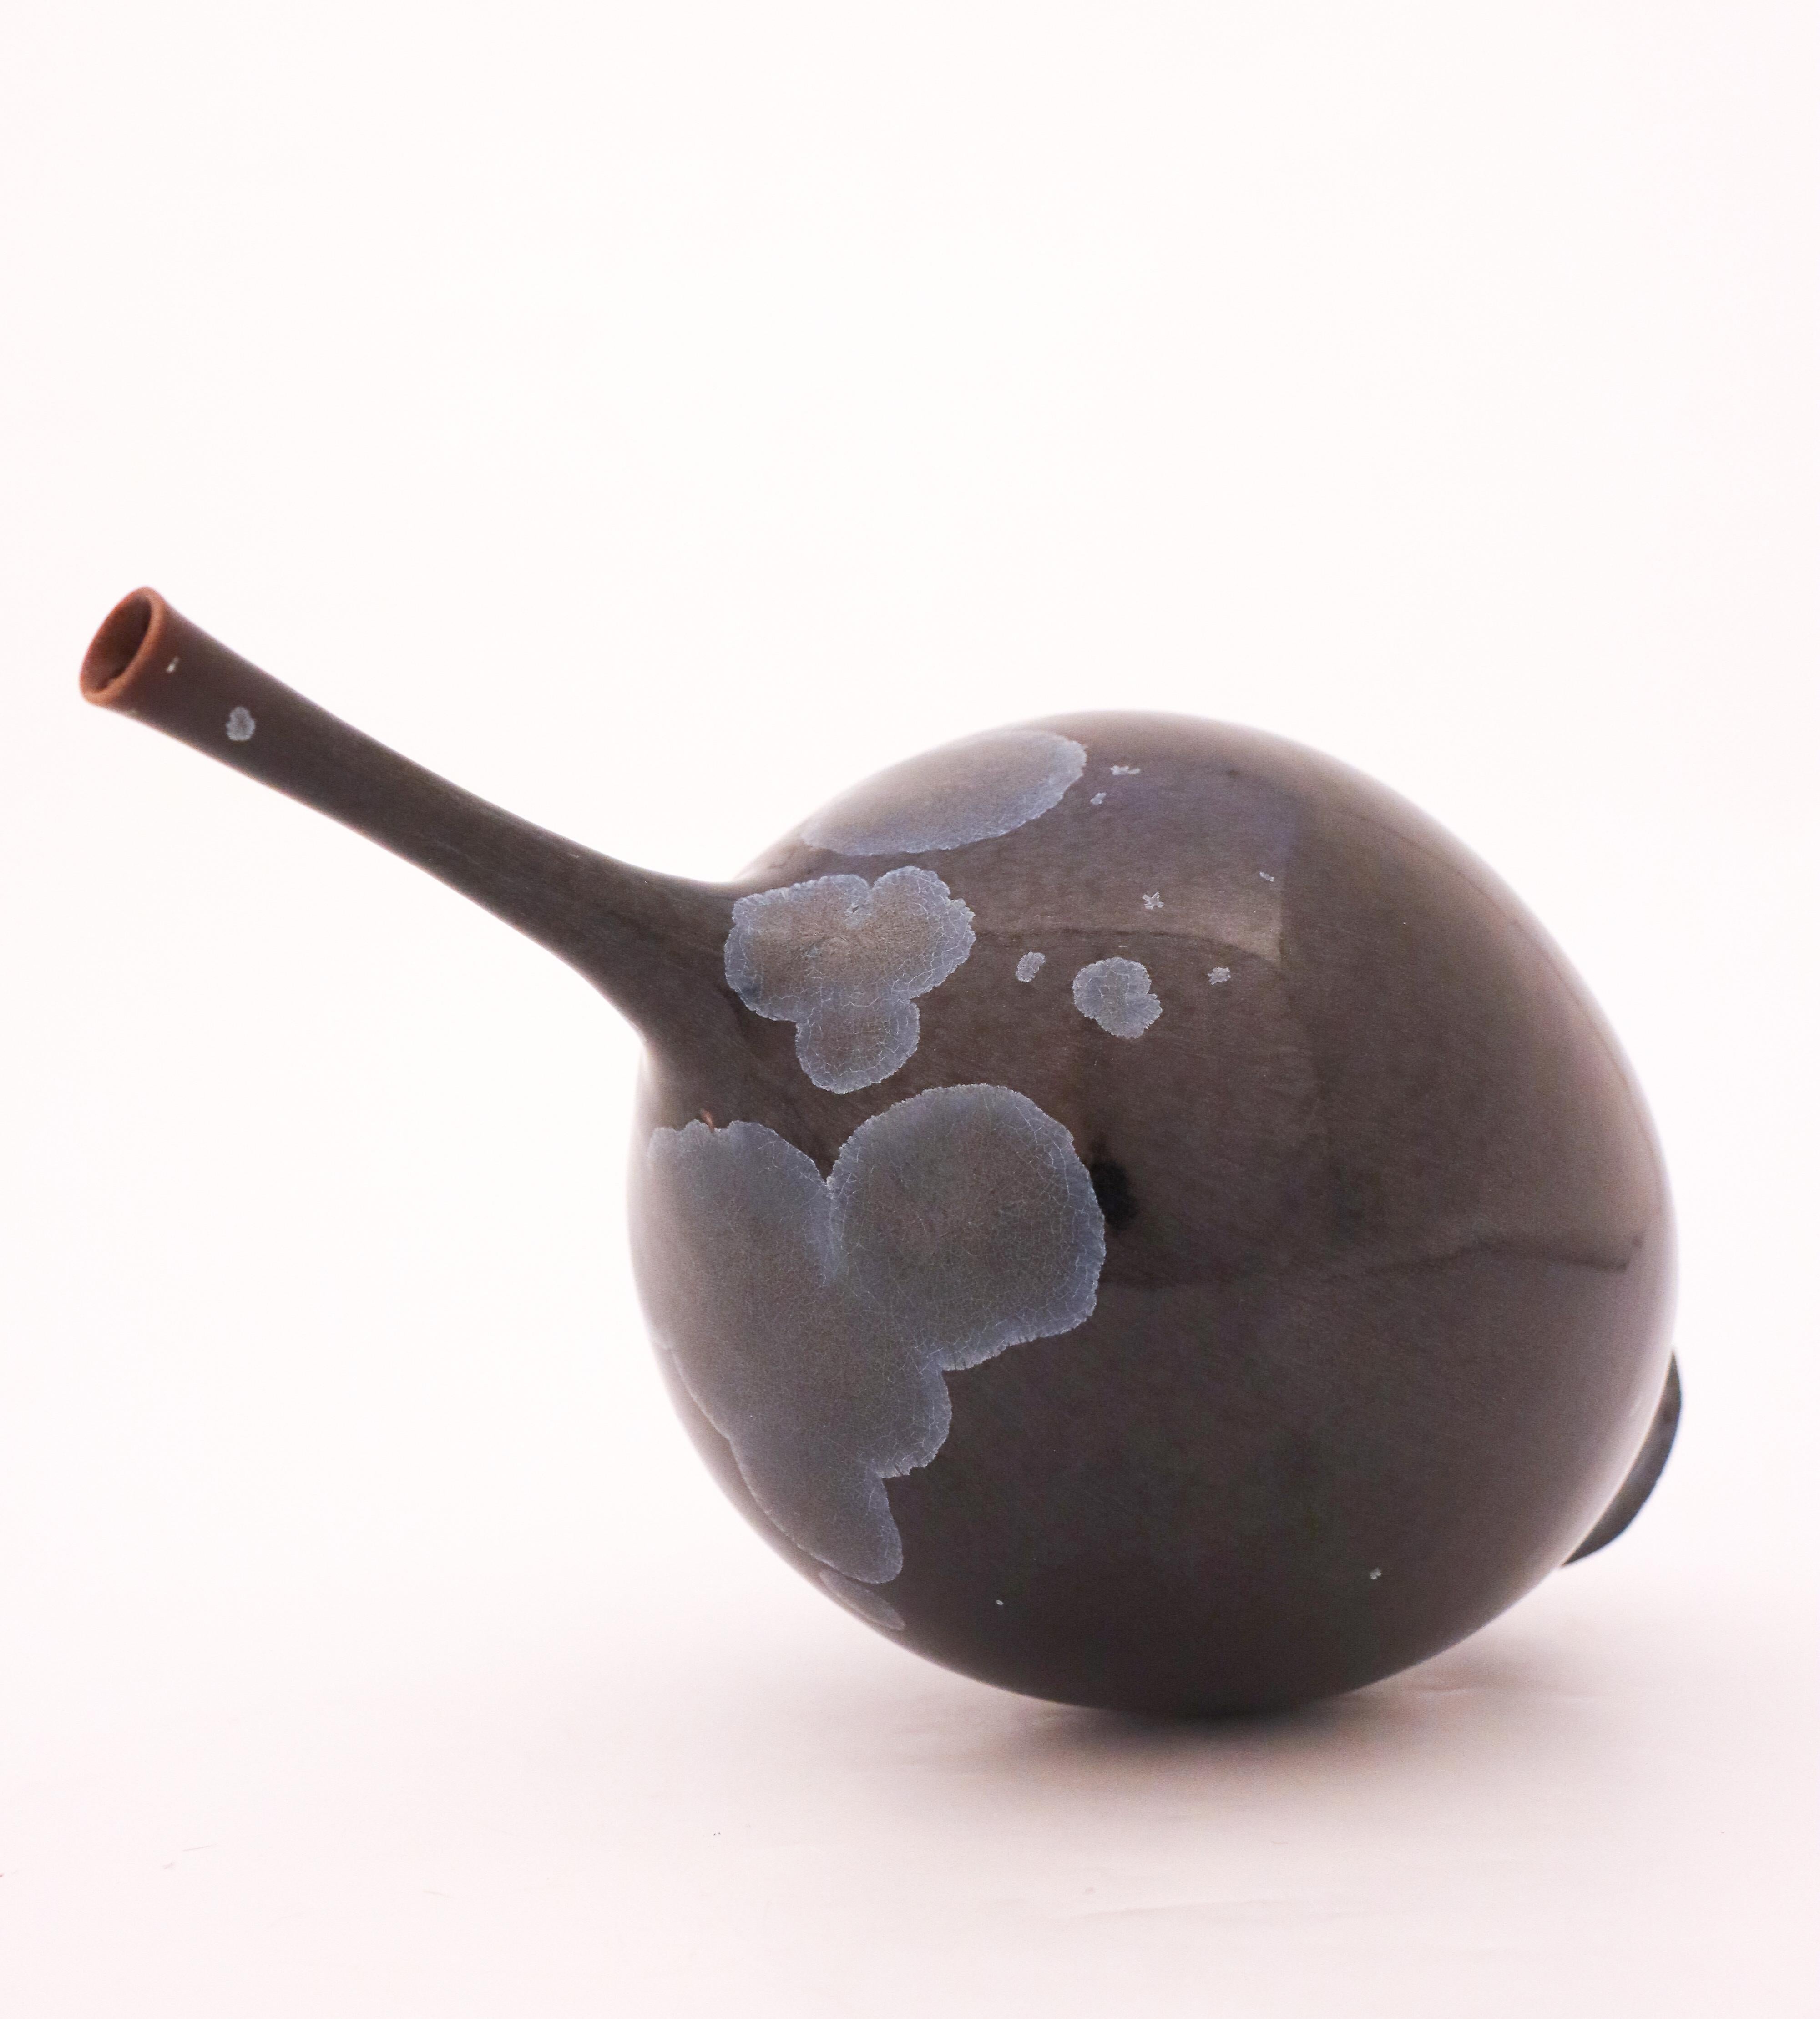 Vase by Isak Isaksson, Black / Grey glaze, Contemporary Swedish Ceramicist 1